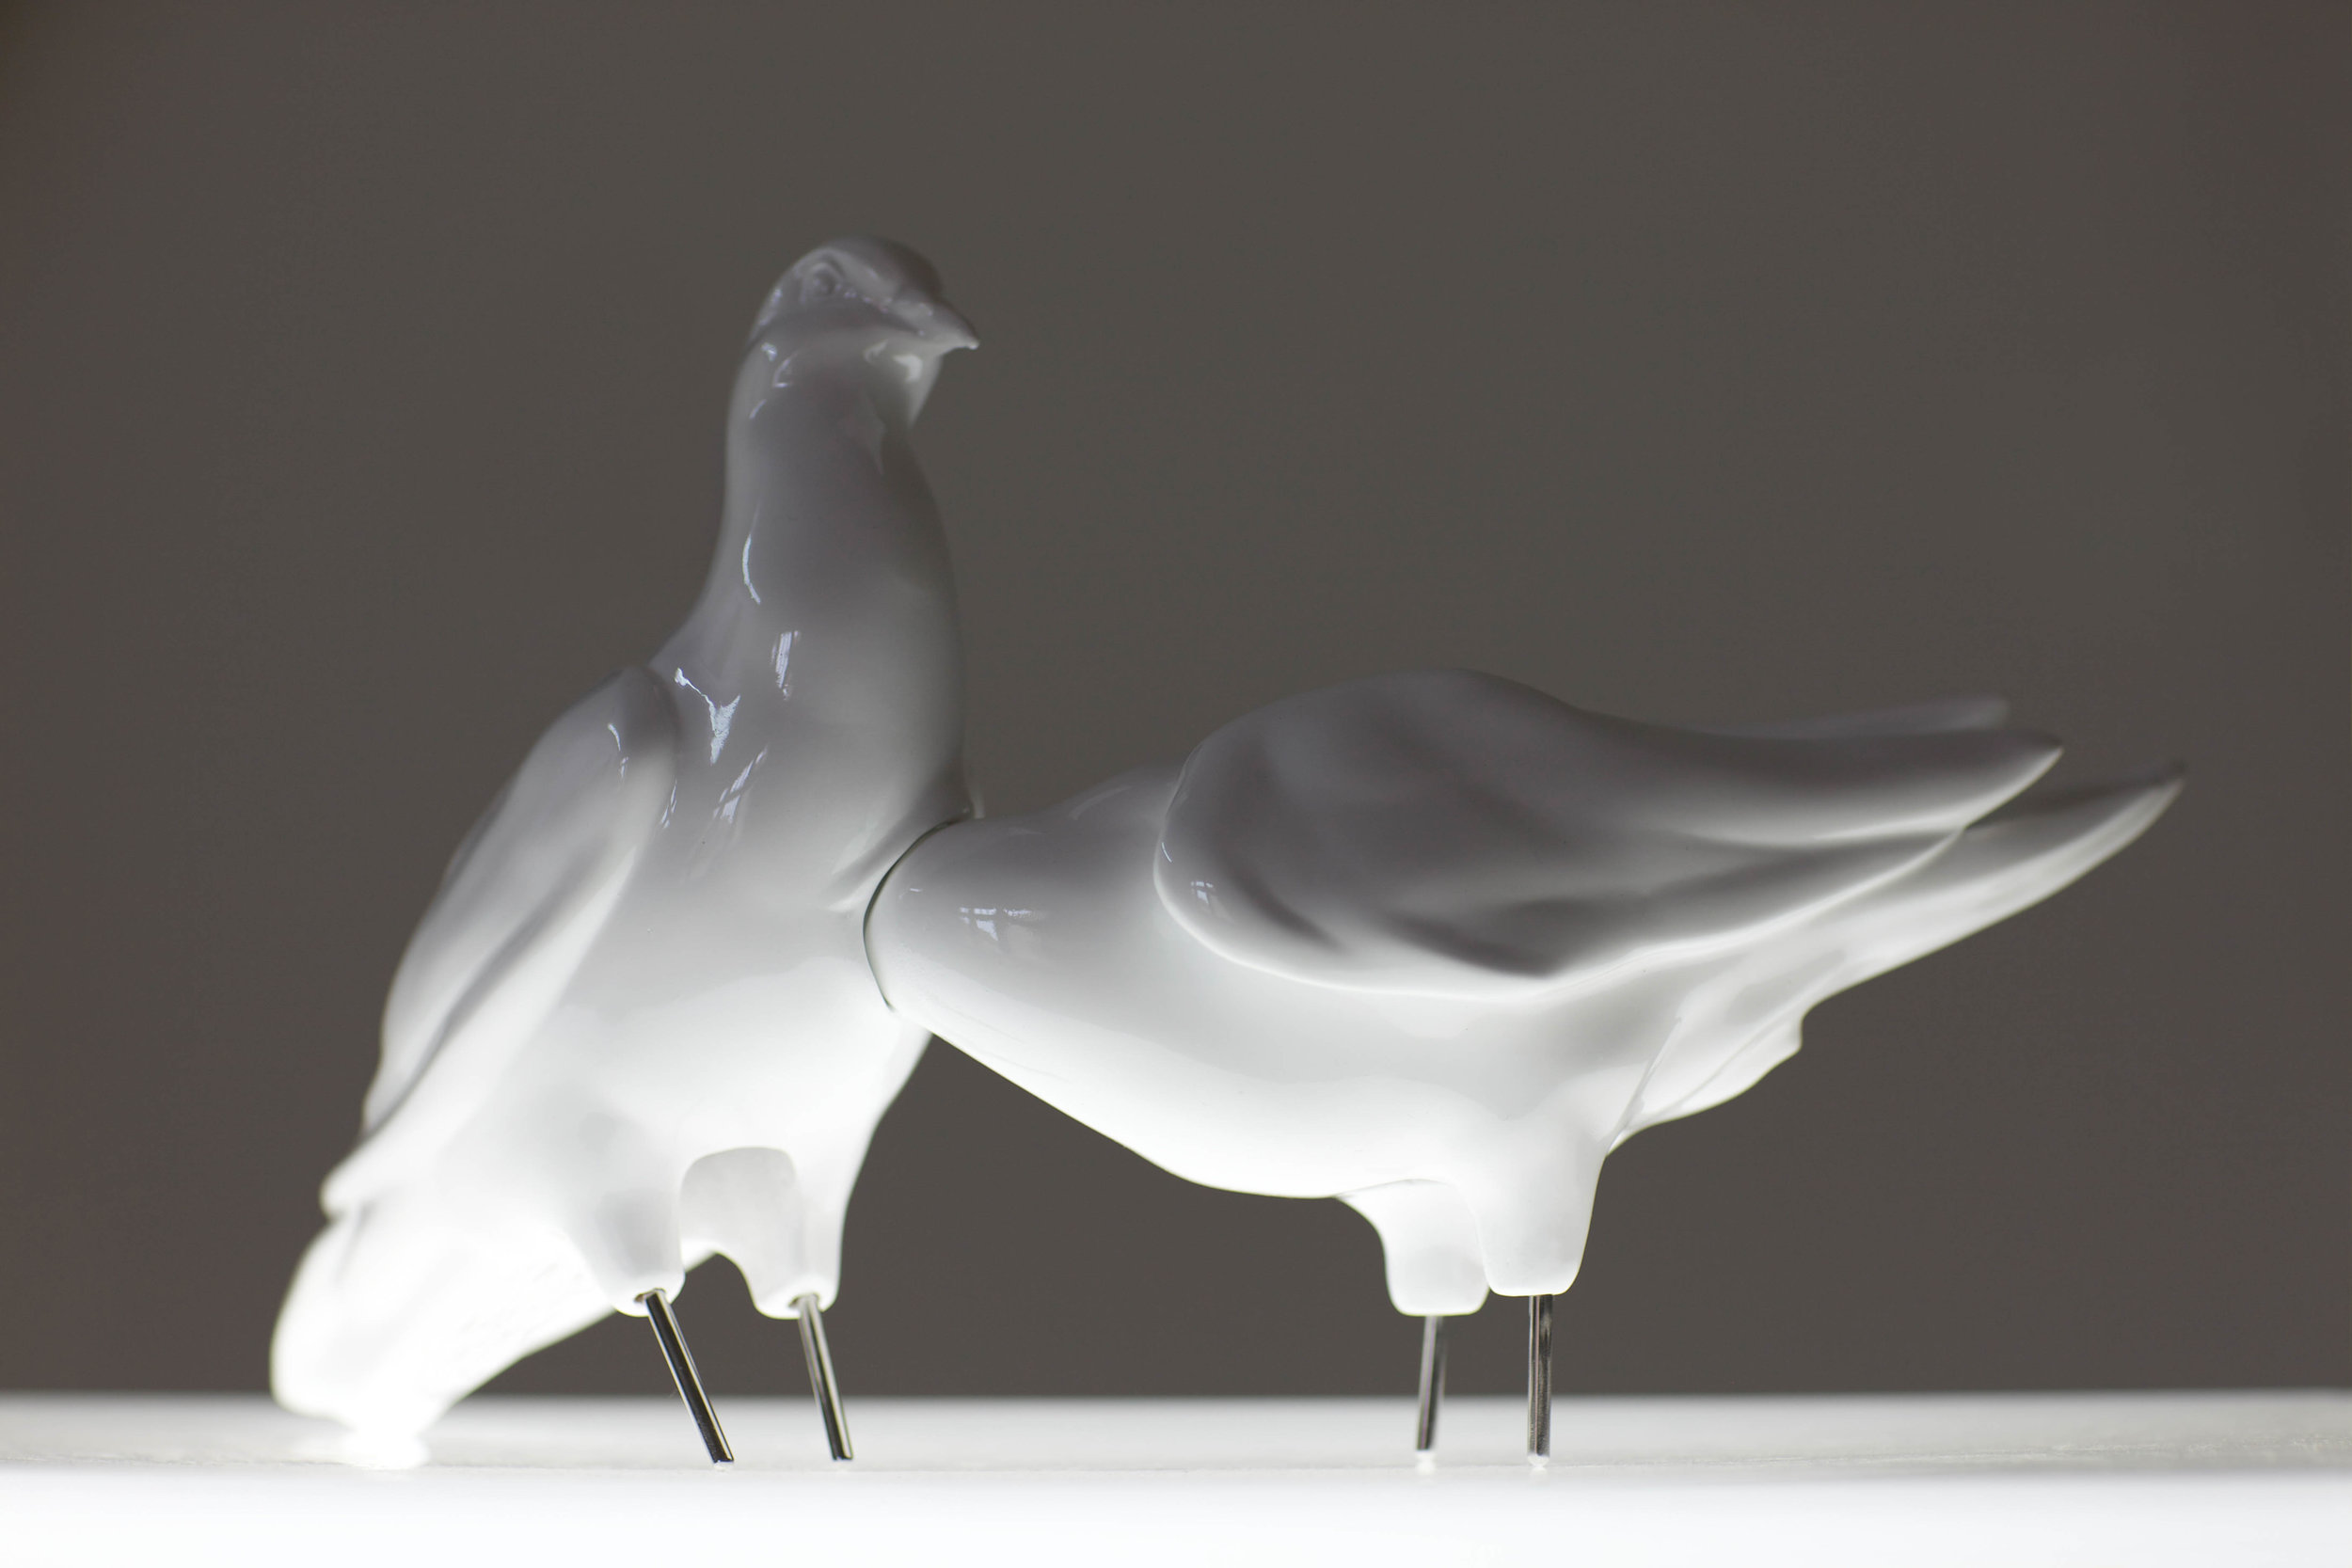 INNER SONG [1] (2010 – 2014) ceramics, inox, aluminum, wood, metal, neon light, glass, 110 x 110 x 127 cm